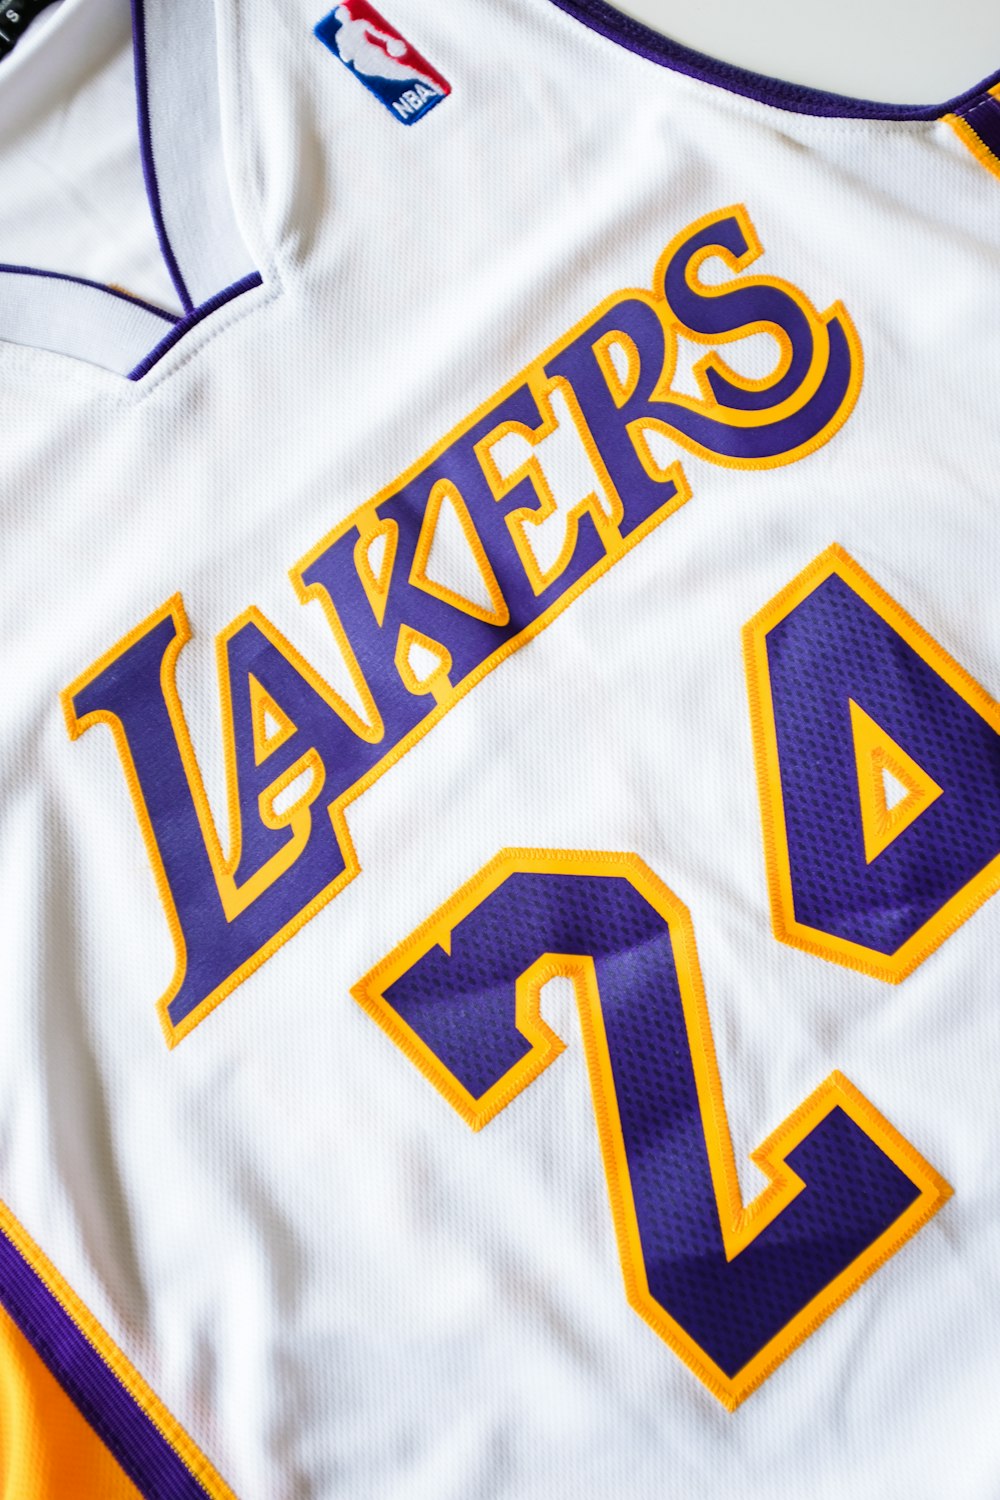 Kobe Bryant Lakers Nba Jersey 24 Photo Free Apparel Image On Unsplash